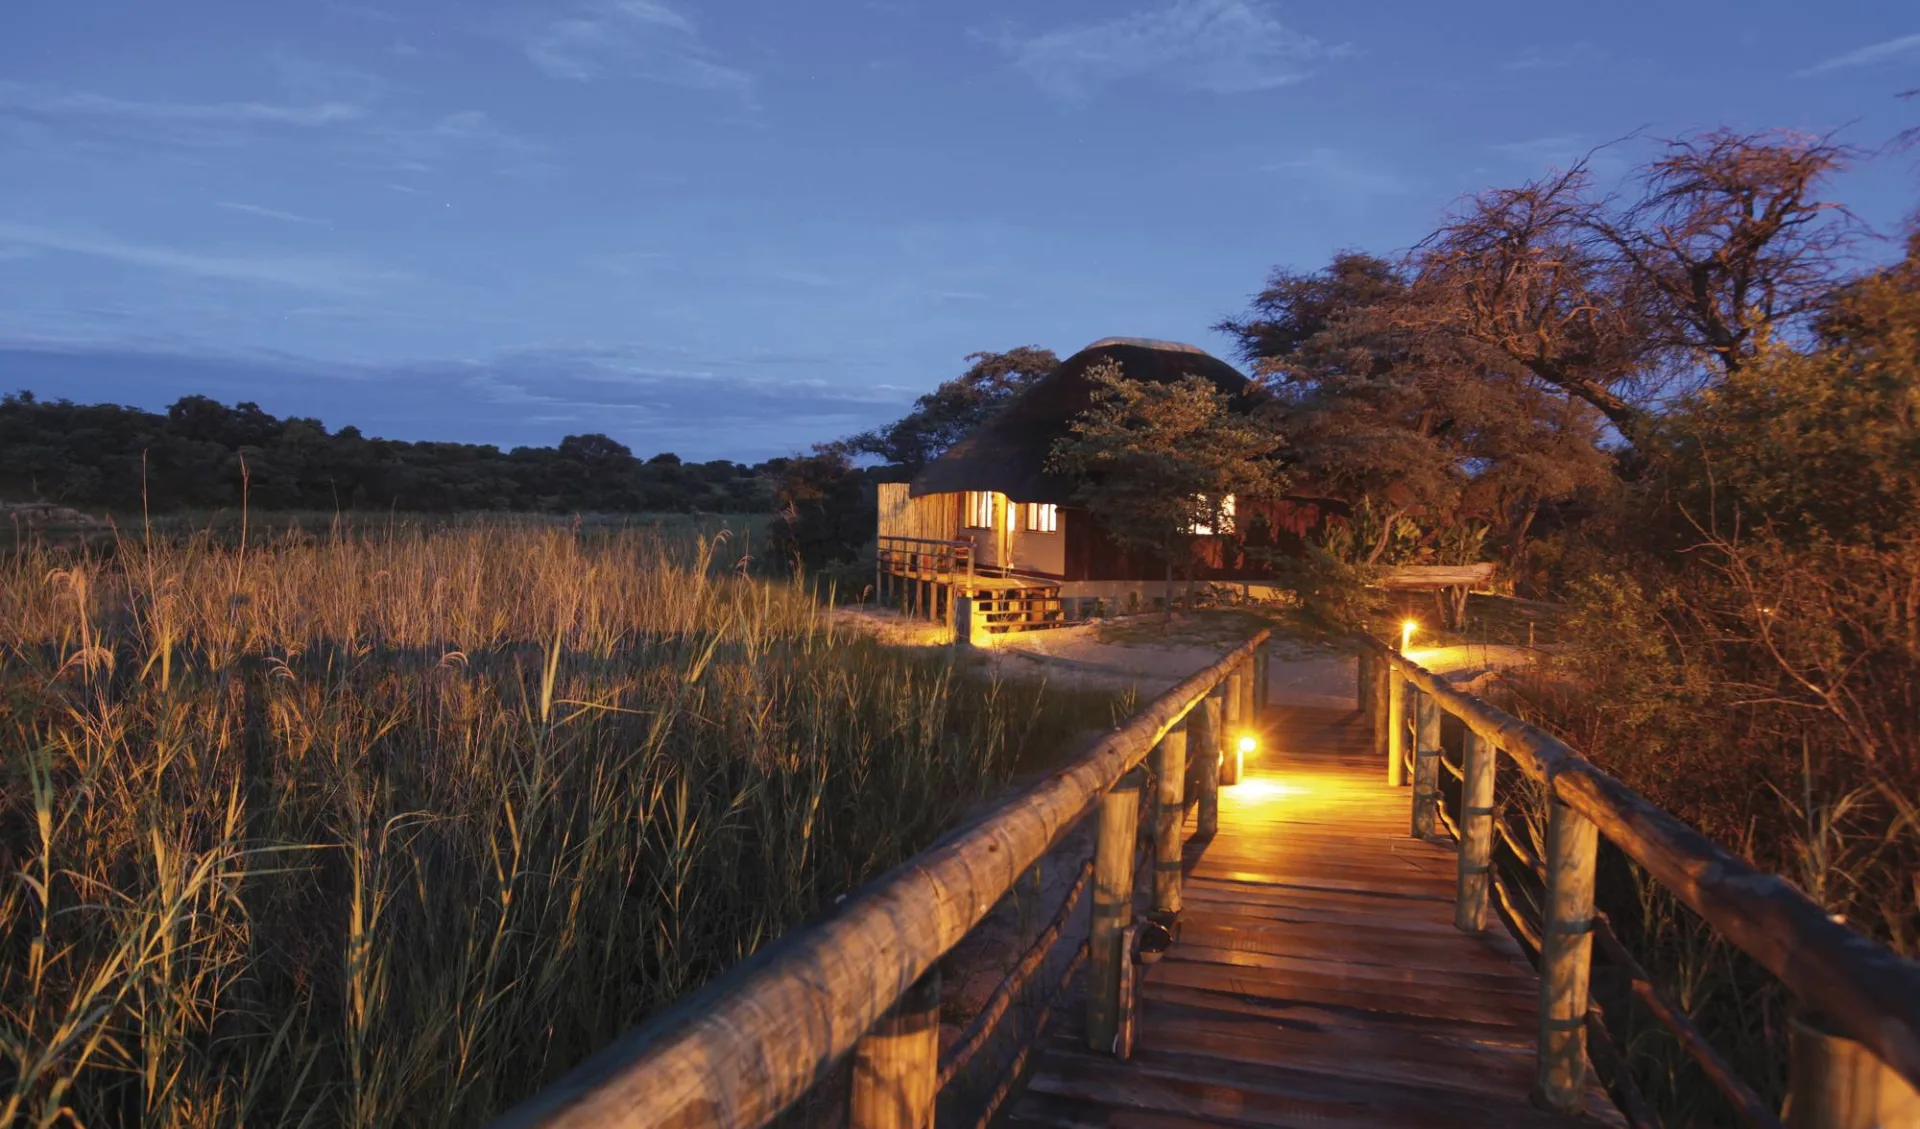 Hakusembe River Lodge in Rundu:  HAKUSEMBE